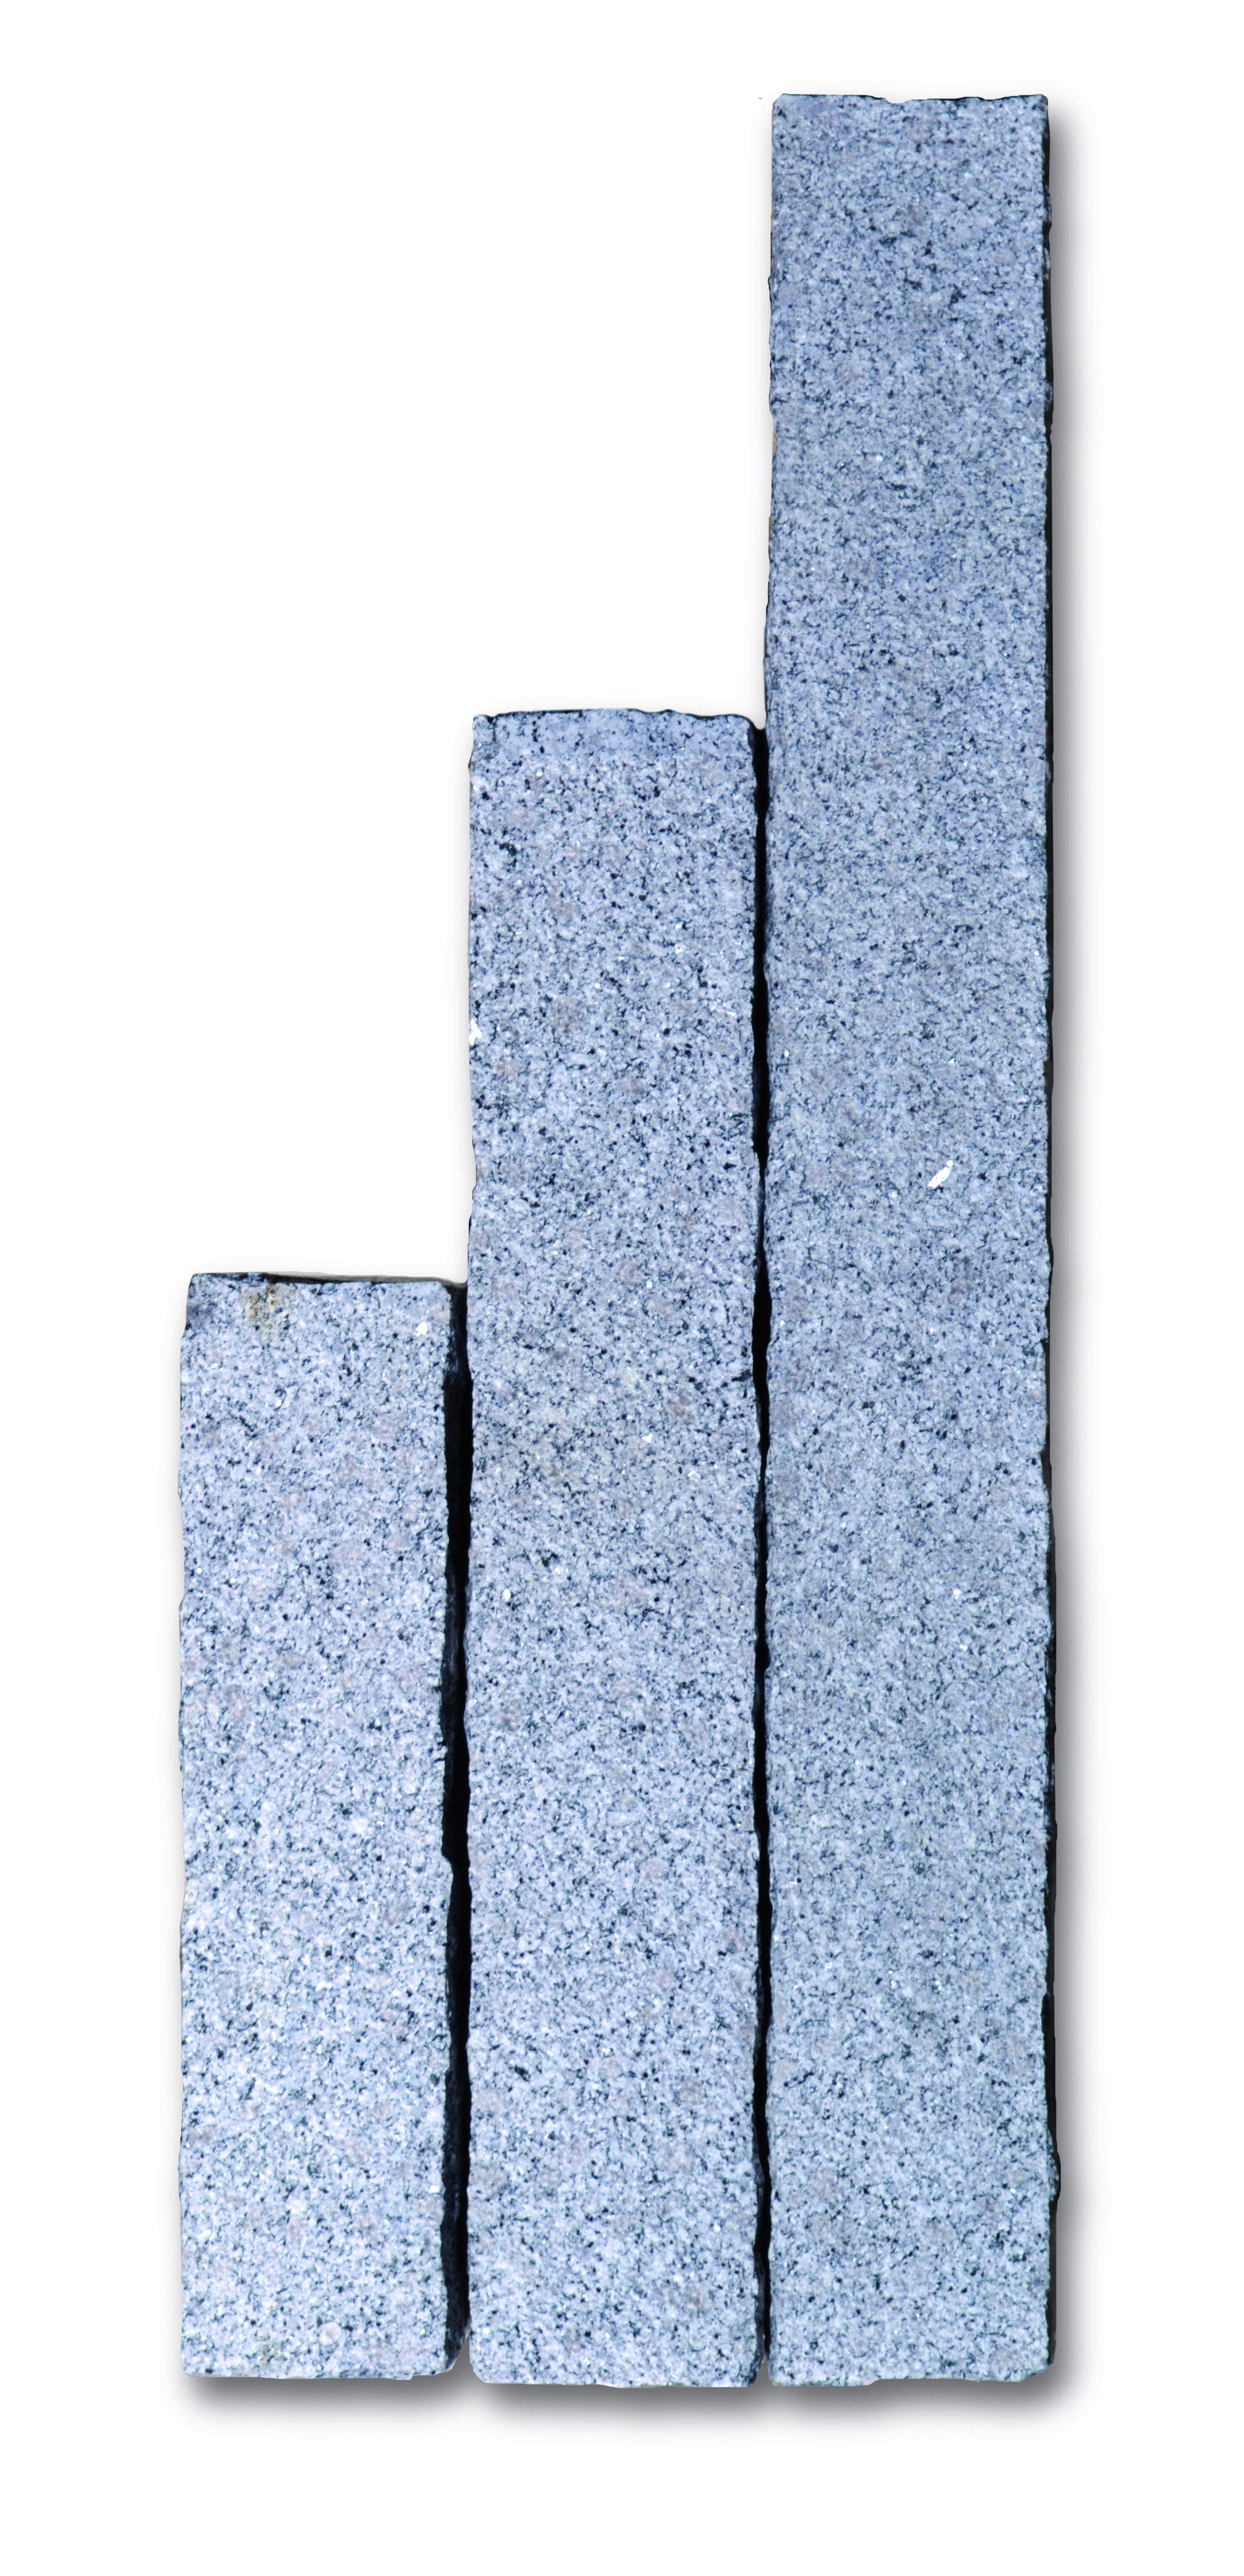 ZL OST Palisade BASIC gestockt 12x12x100cm grau Granit China